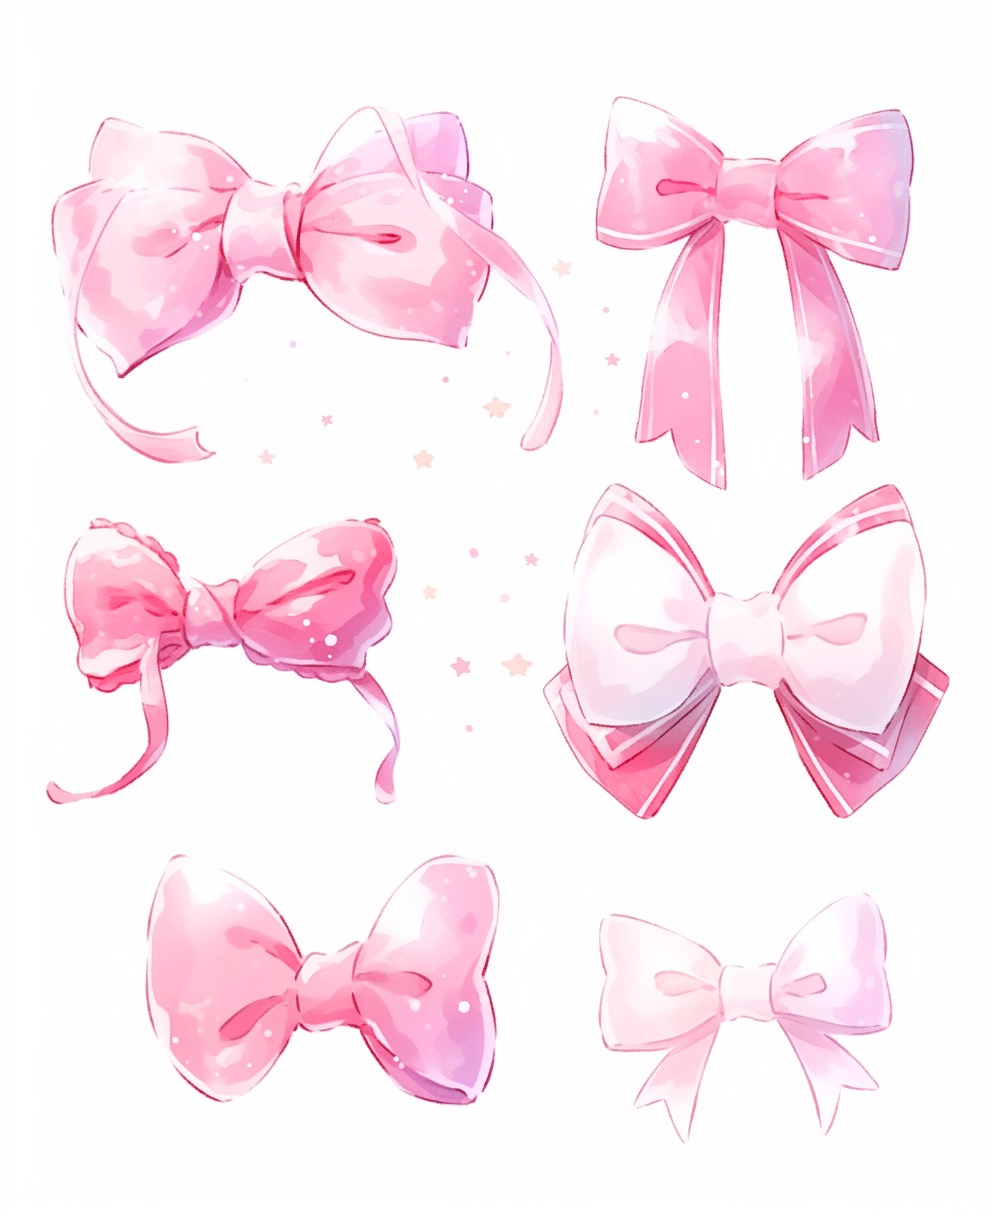 F2U] - Pink Bows Illustrations by SoftPeachys on DeviantArt